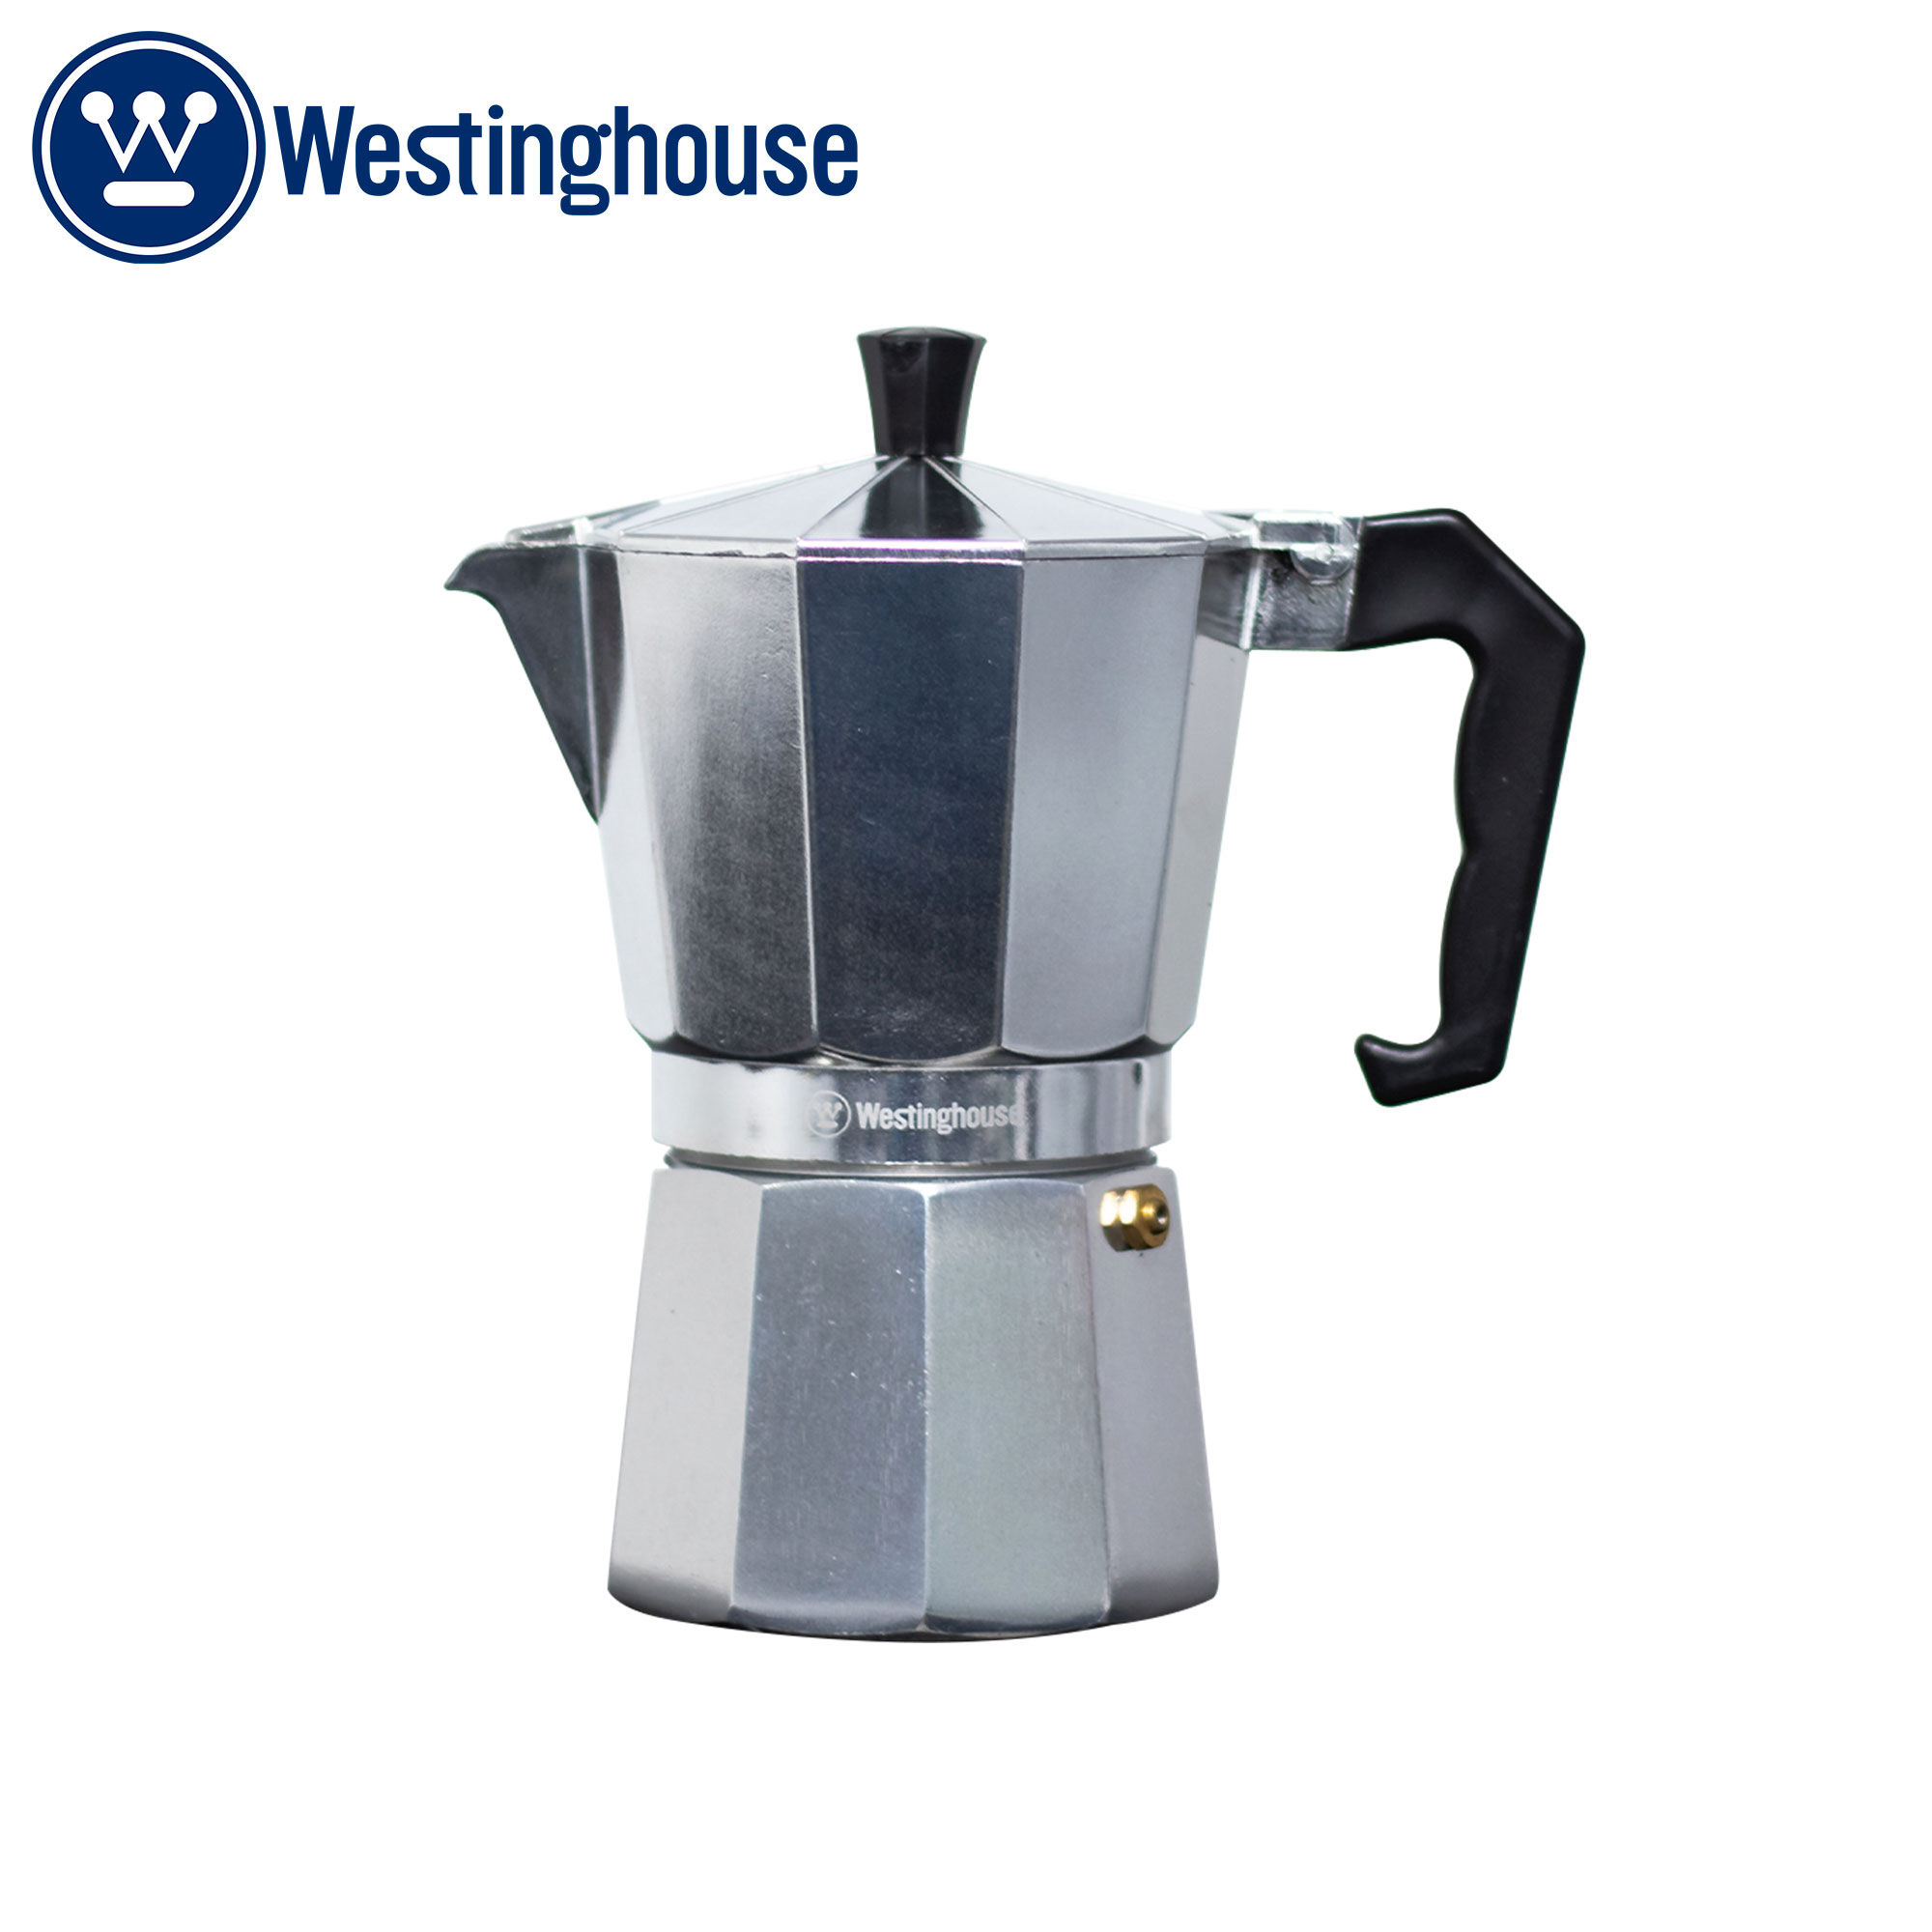 Cafetera 9 tazas espresso Westinghouse - Multimax Store